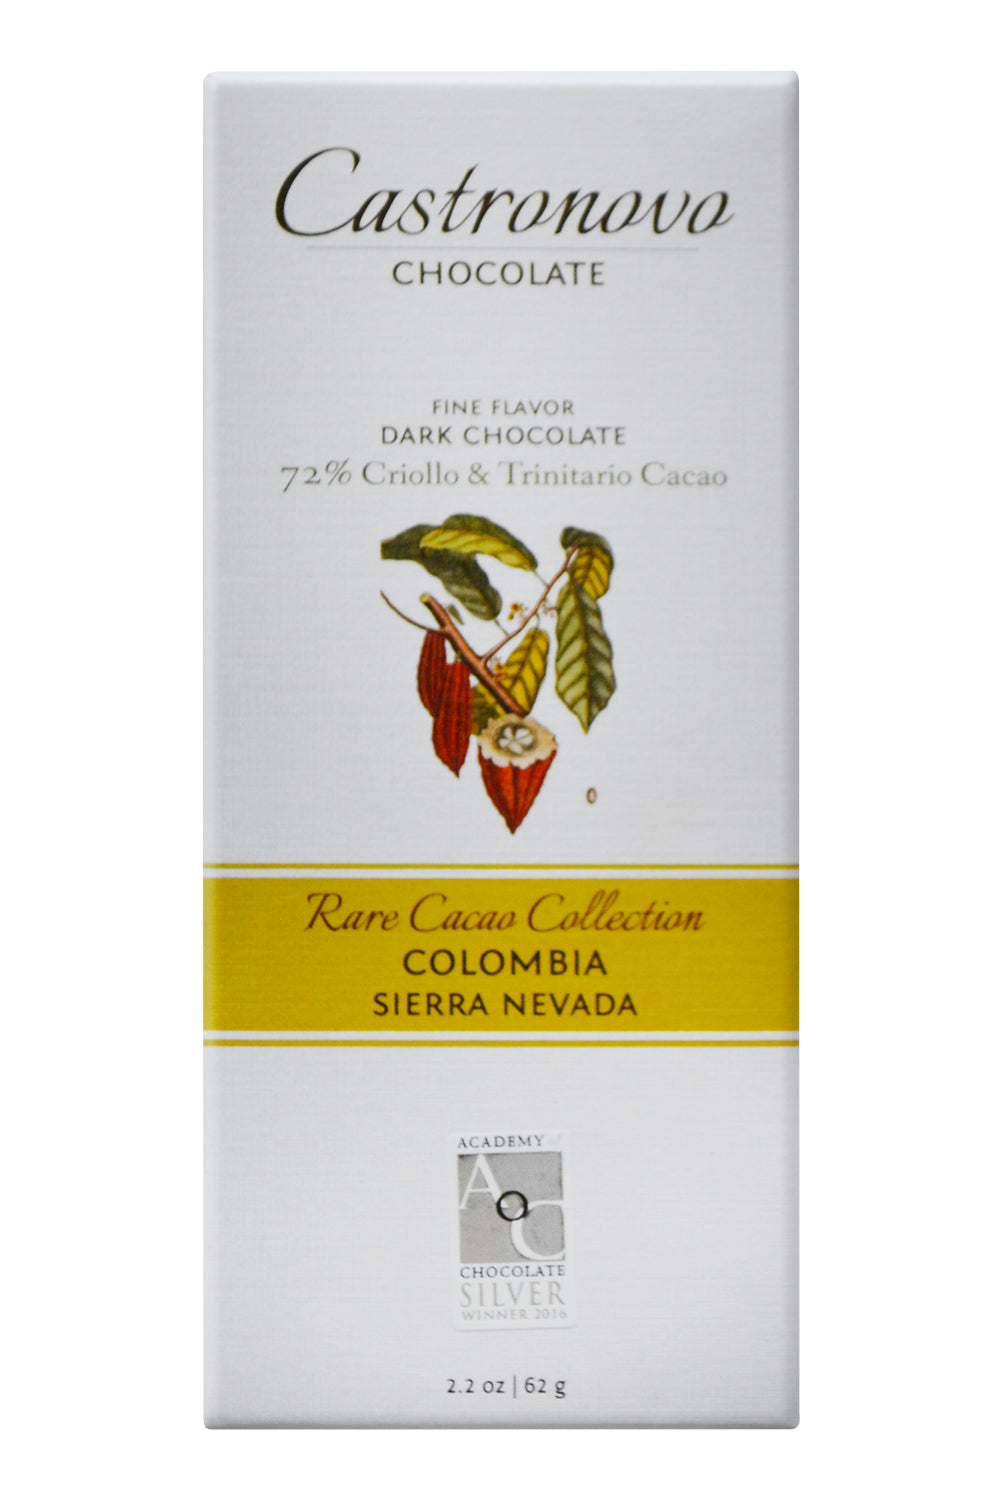 Castronovo Dark Chocolate - Sierra Nevada, Colombia - Rare Cacao Collection